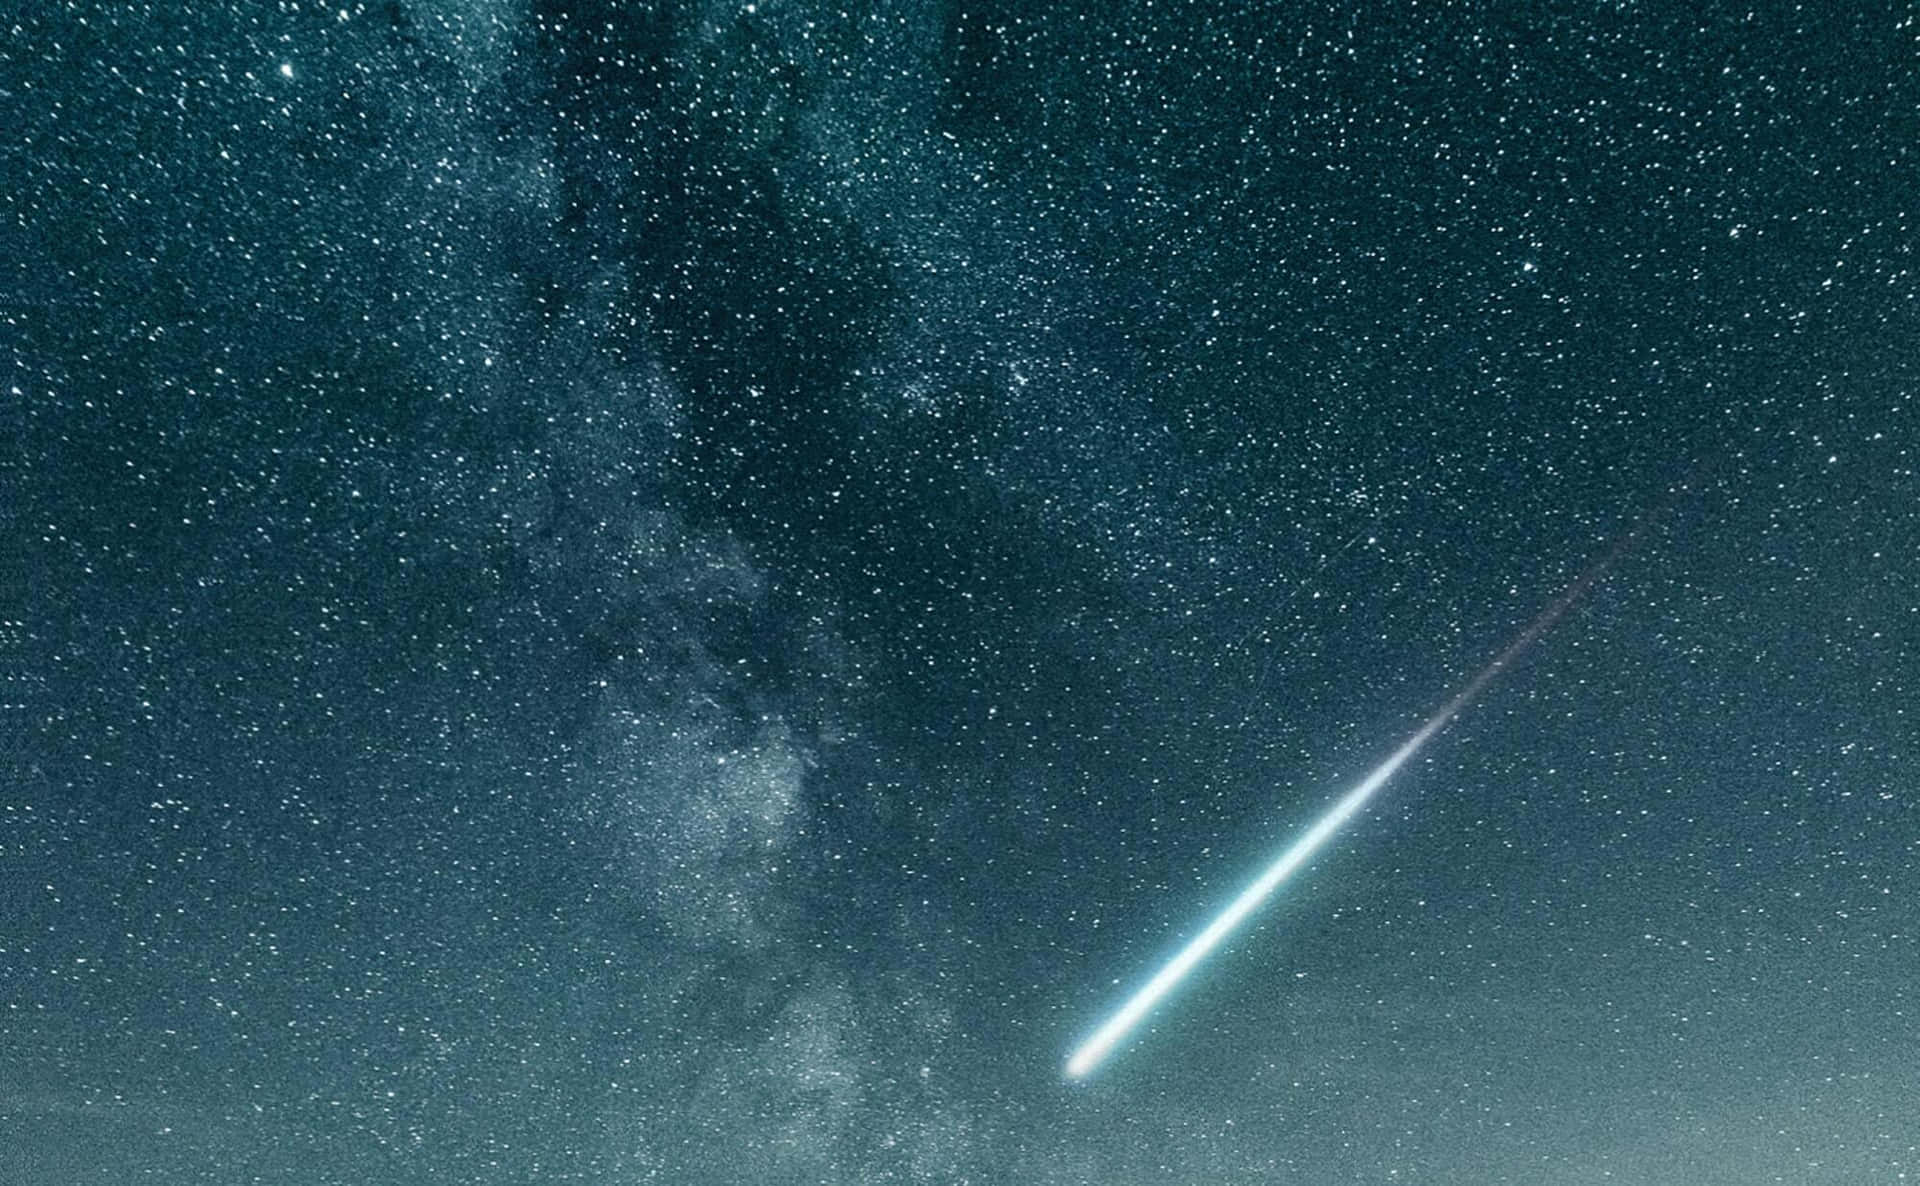 Illuminating the skies: a meteor streaks across the atmosphere.